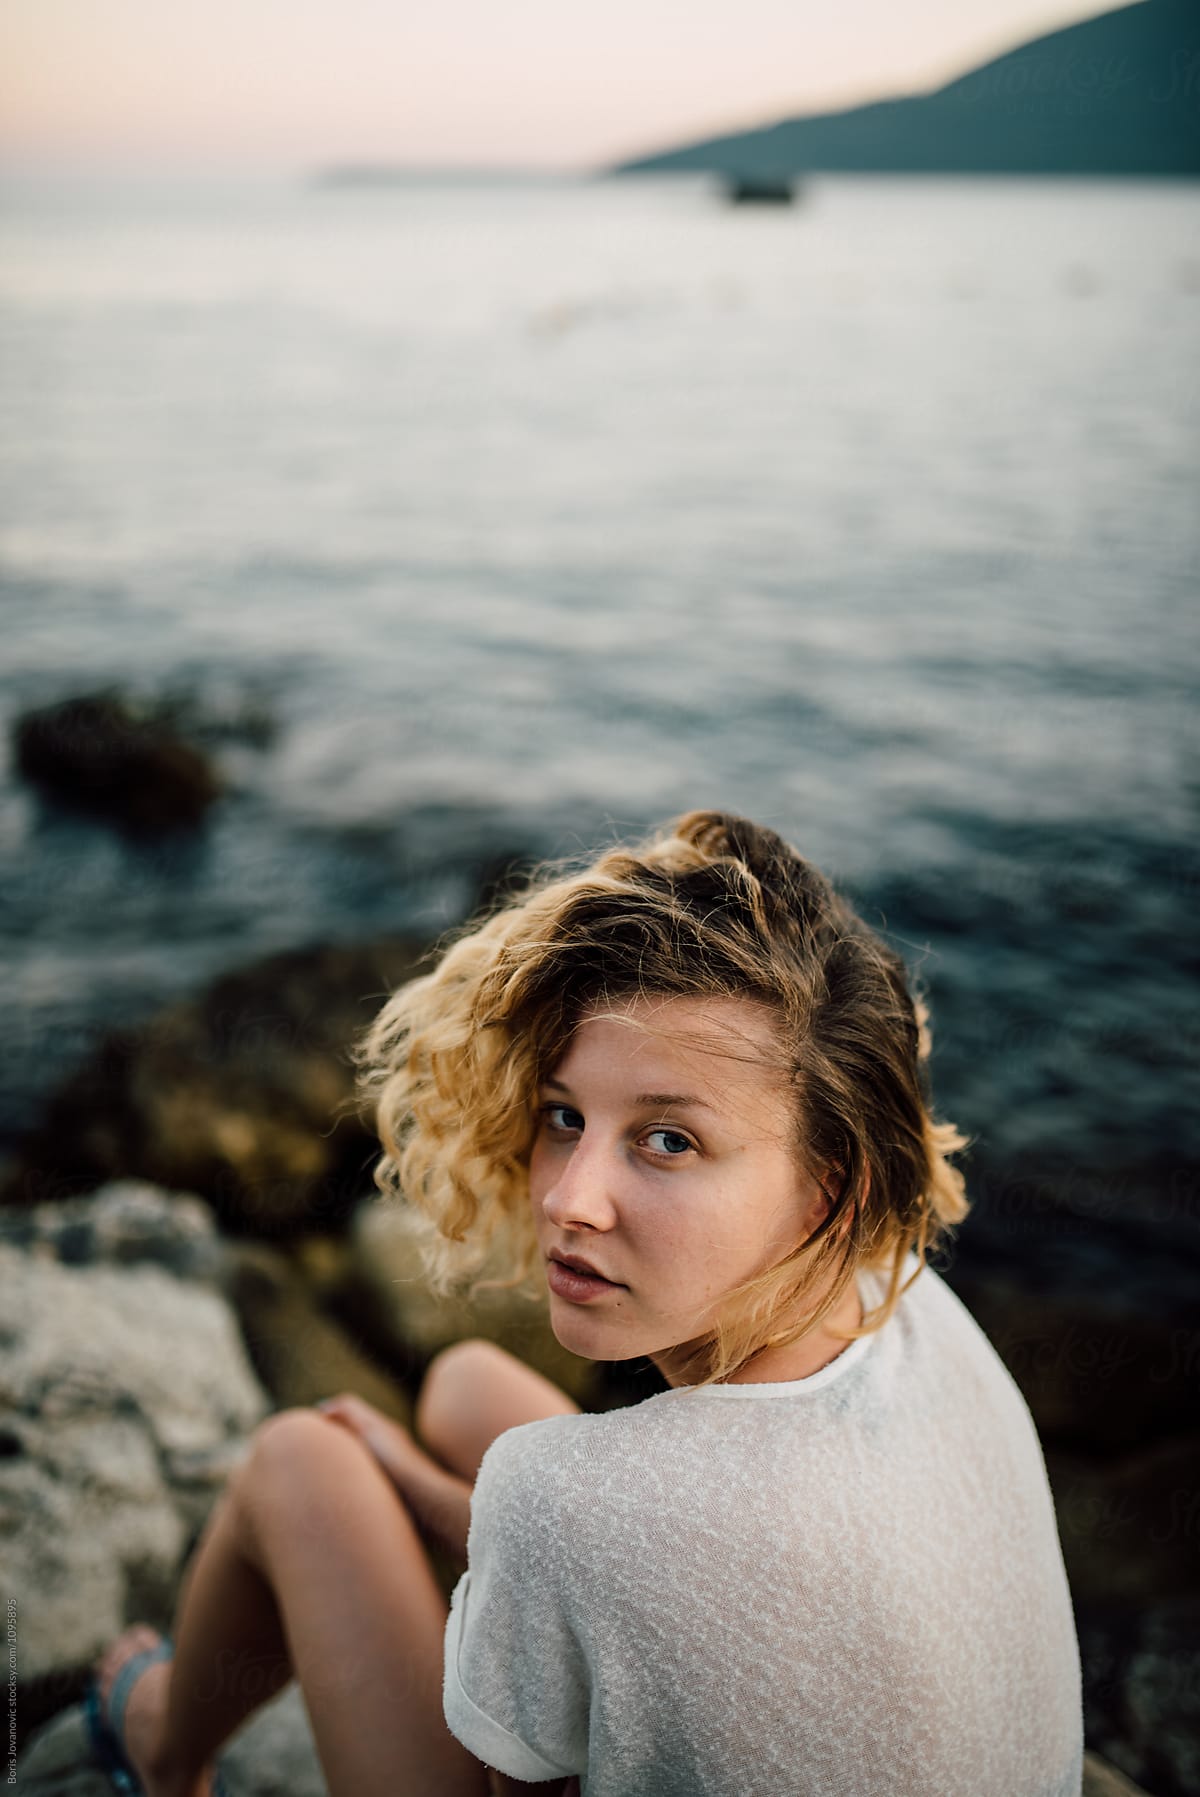 Young Beautiful Woman Sitting Near The Sea By Stocksy Contributor Boris Jovanovic Stocksy 